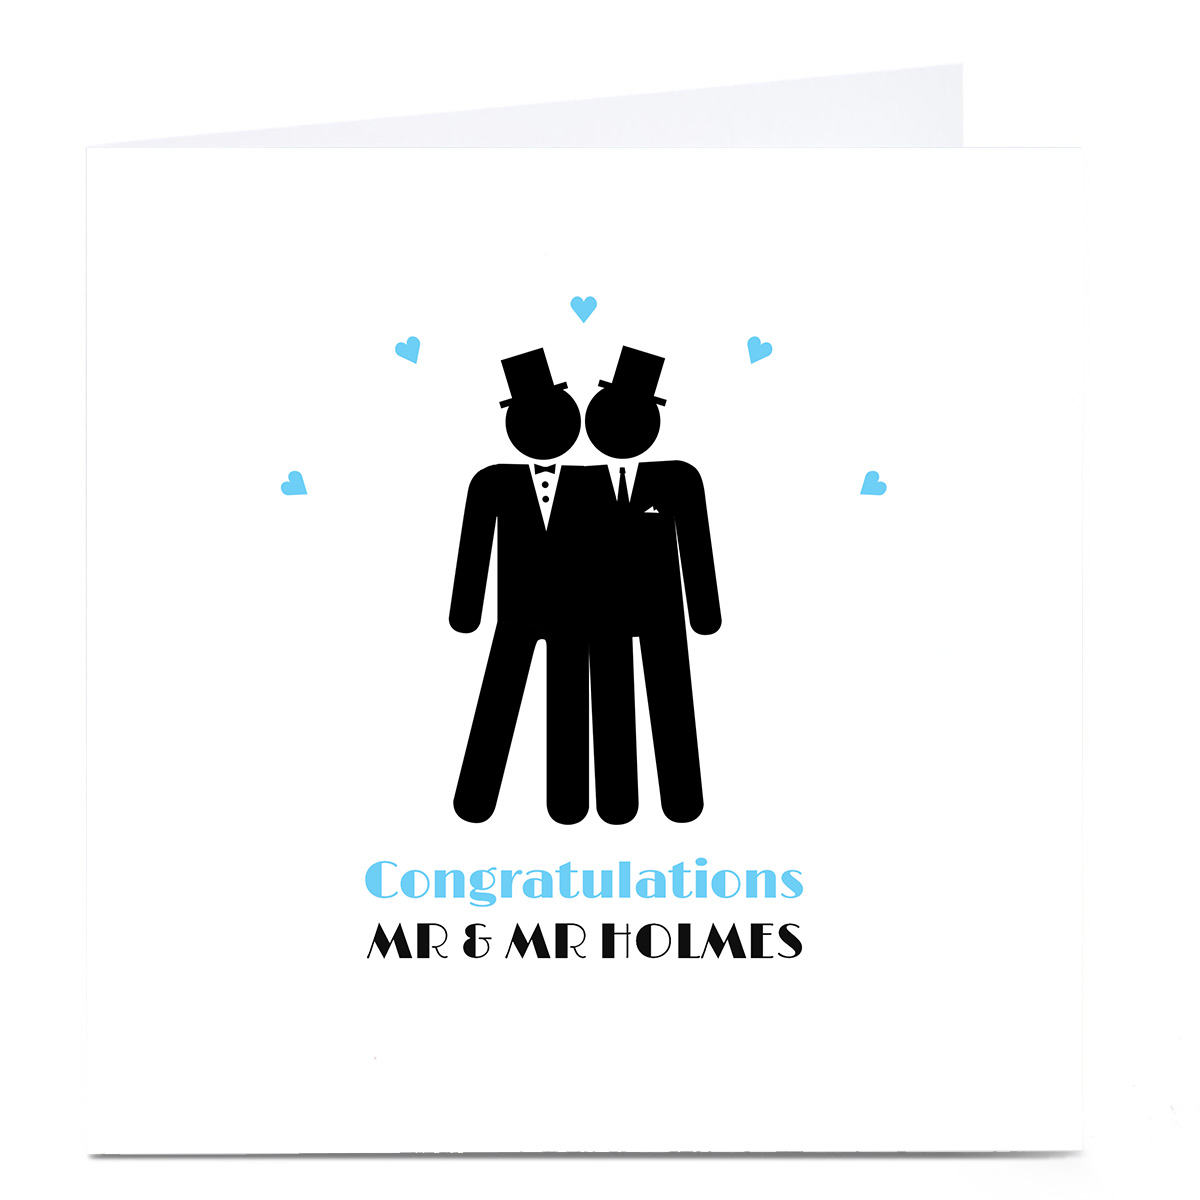 Personalised Wedding Card - Congratulations Mr & Mr